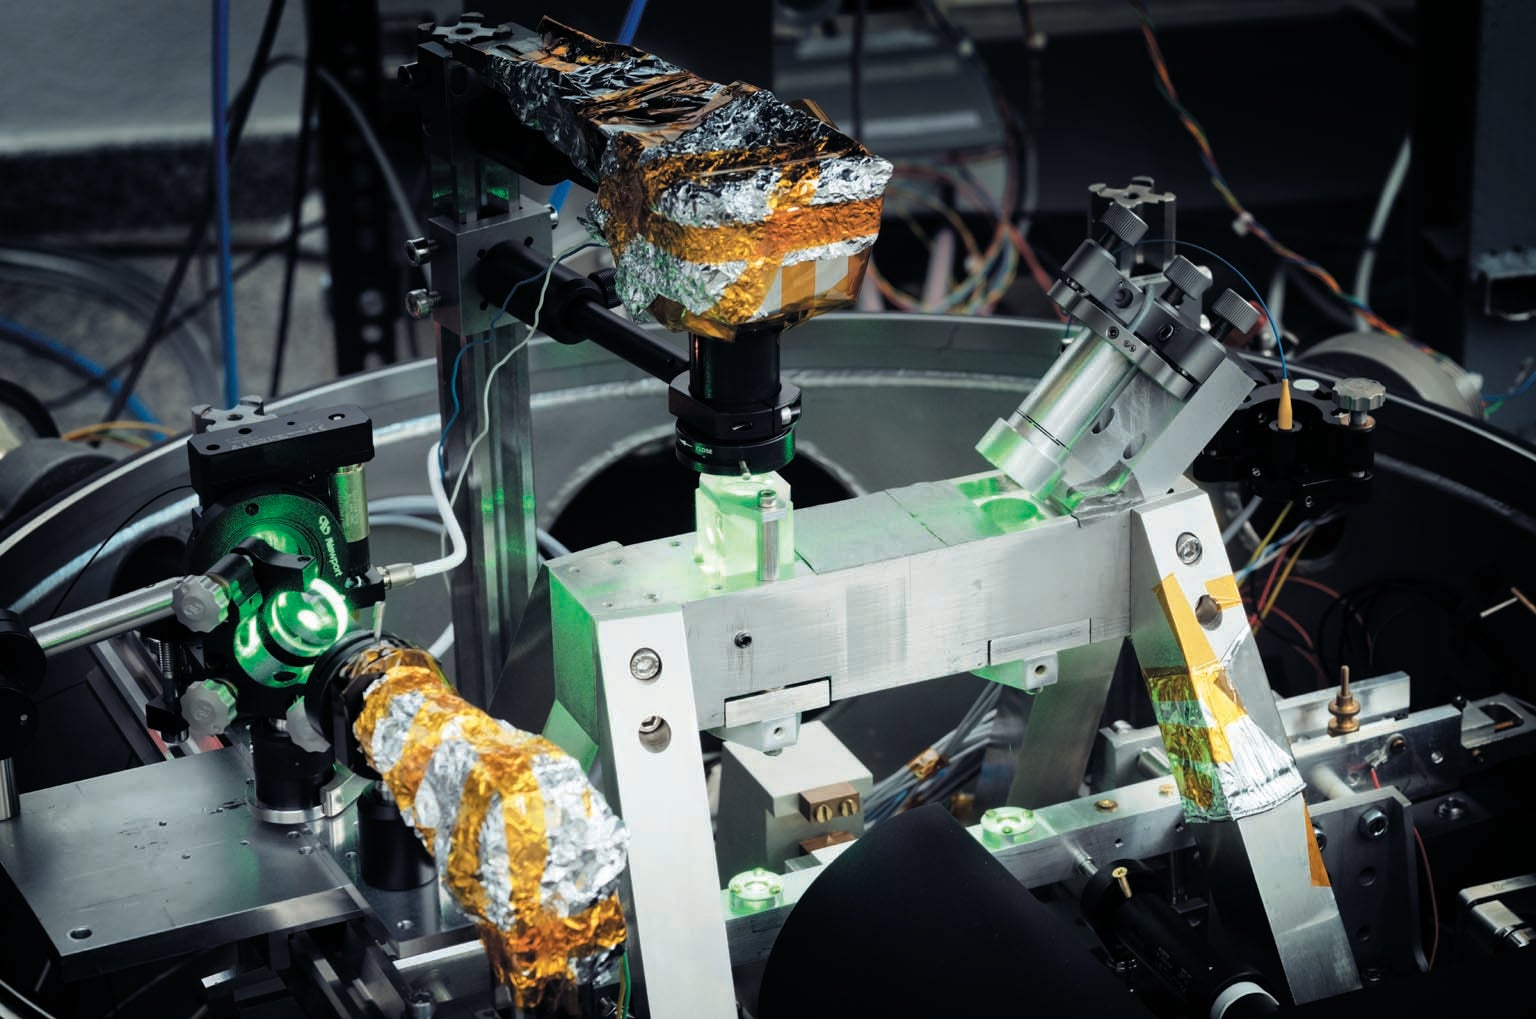 Detail view of metallic scientific equipment illuminated with green laser light.